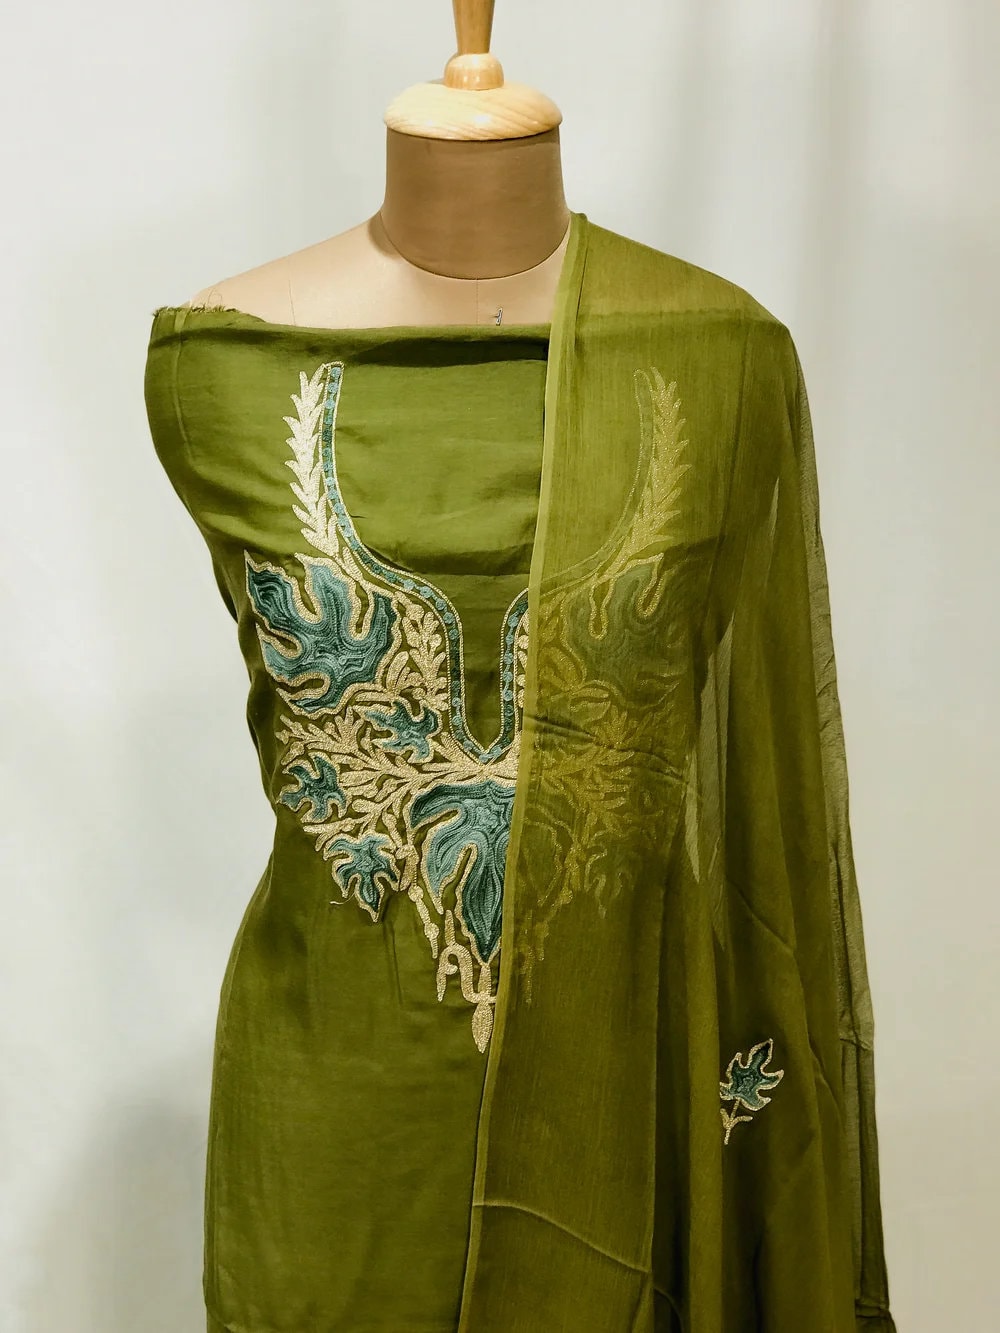 Embroidered Cotton Churidar Salwar Suit